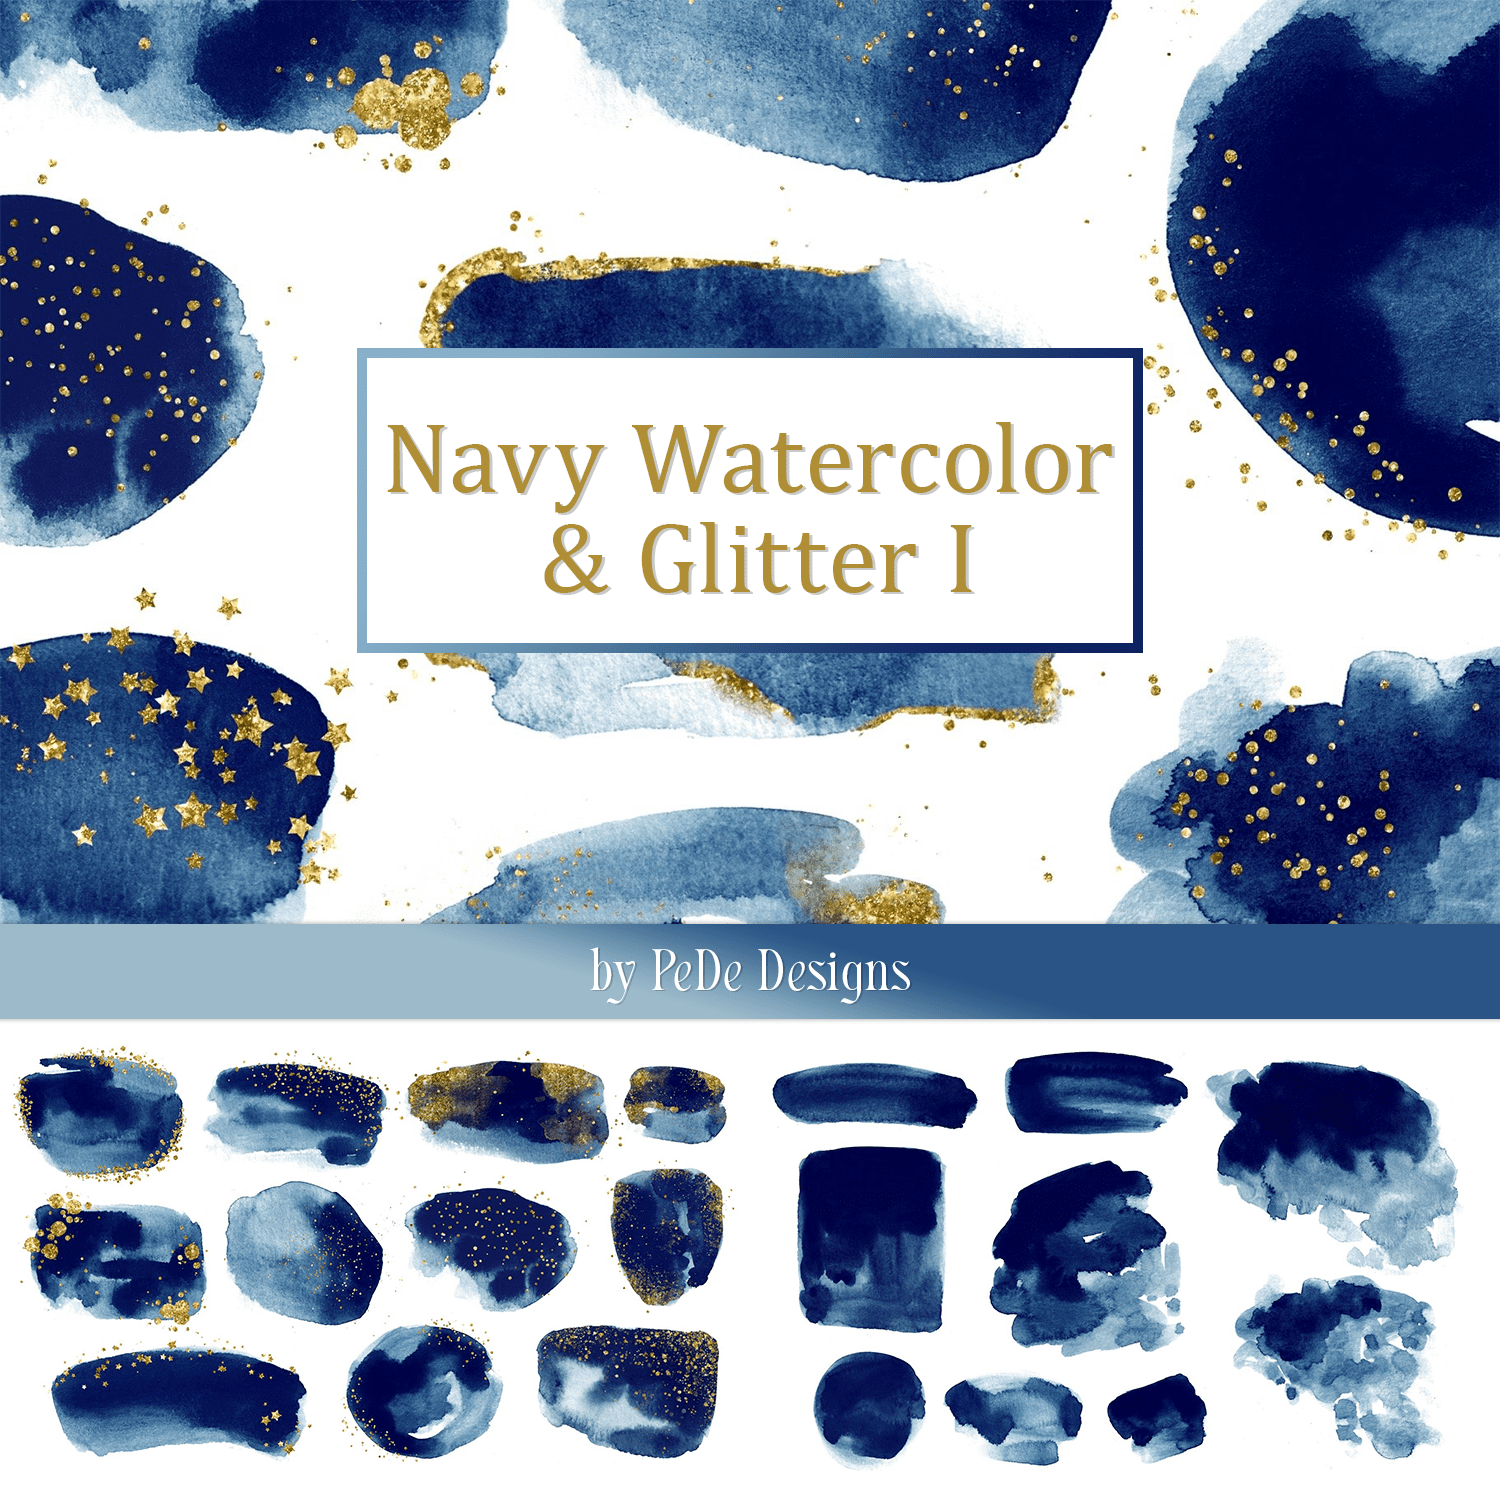 Navy Watercolor & Glitter I.